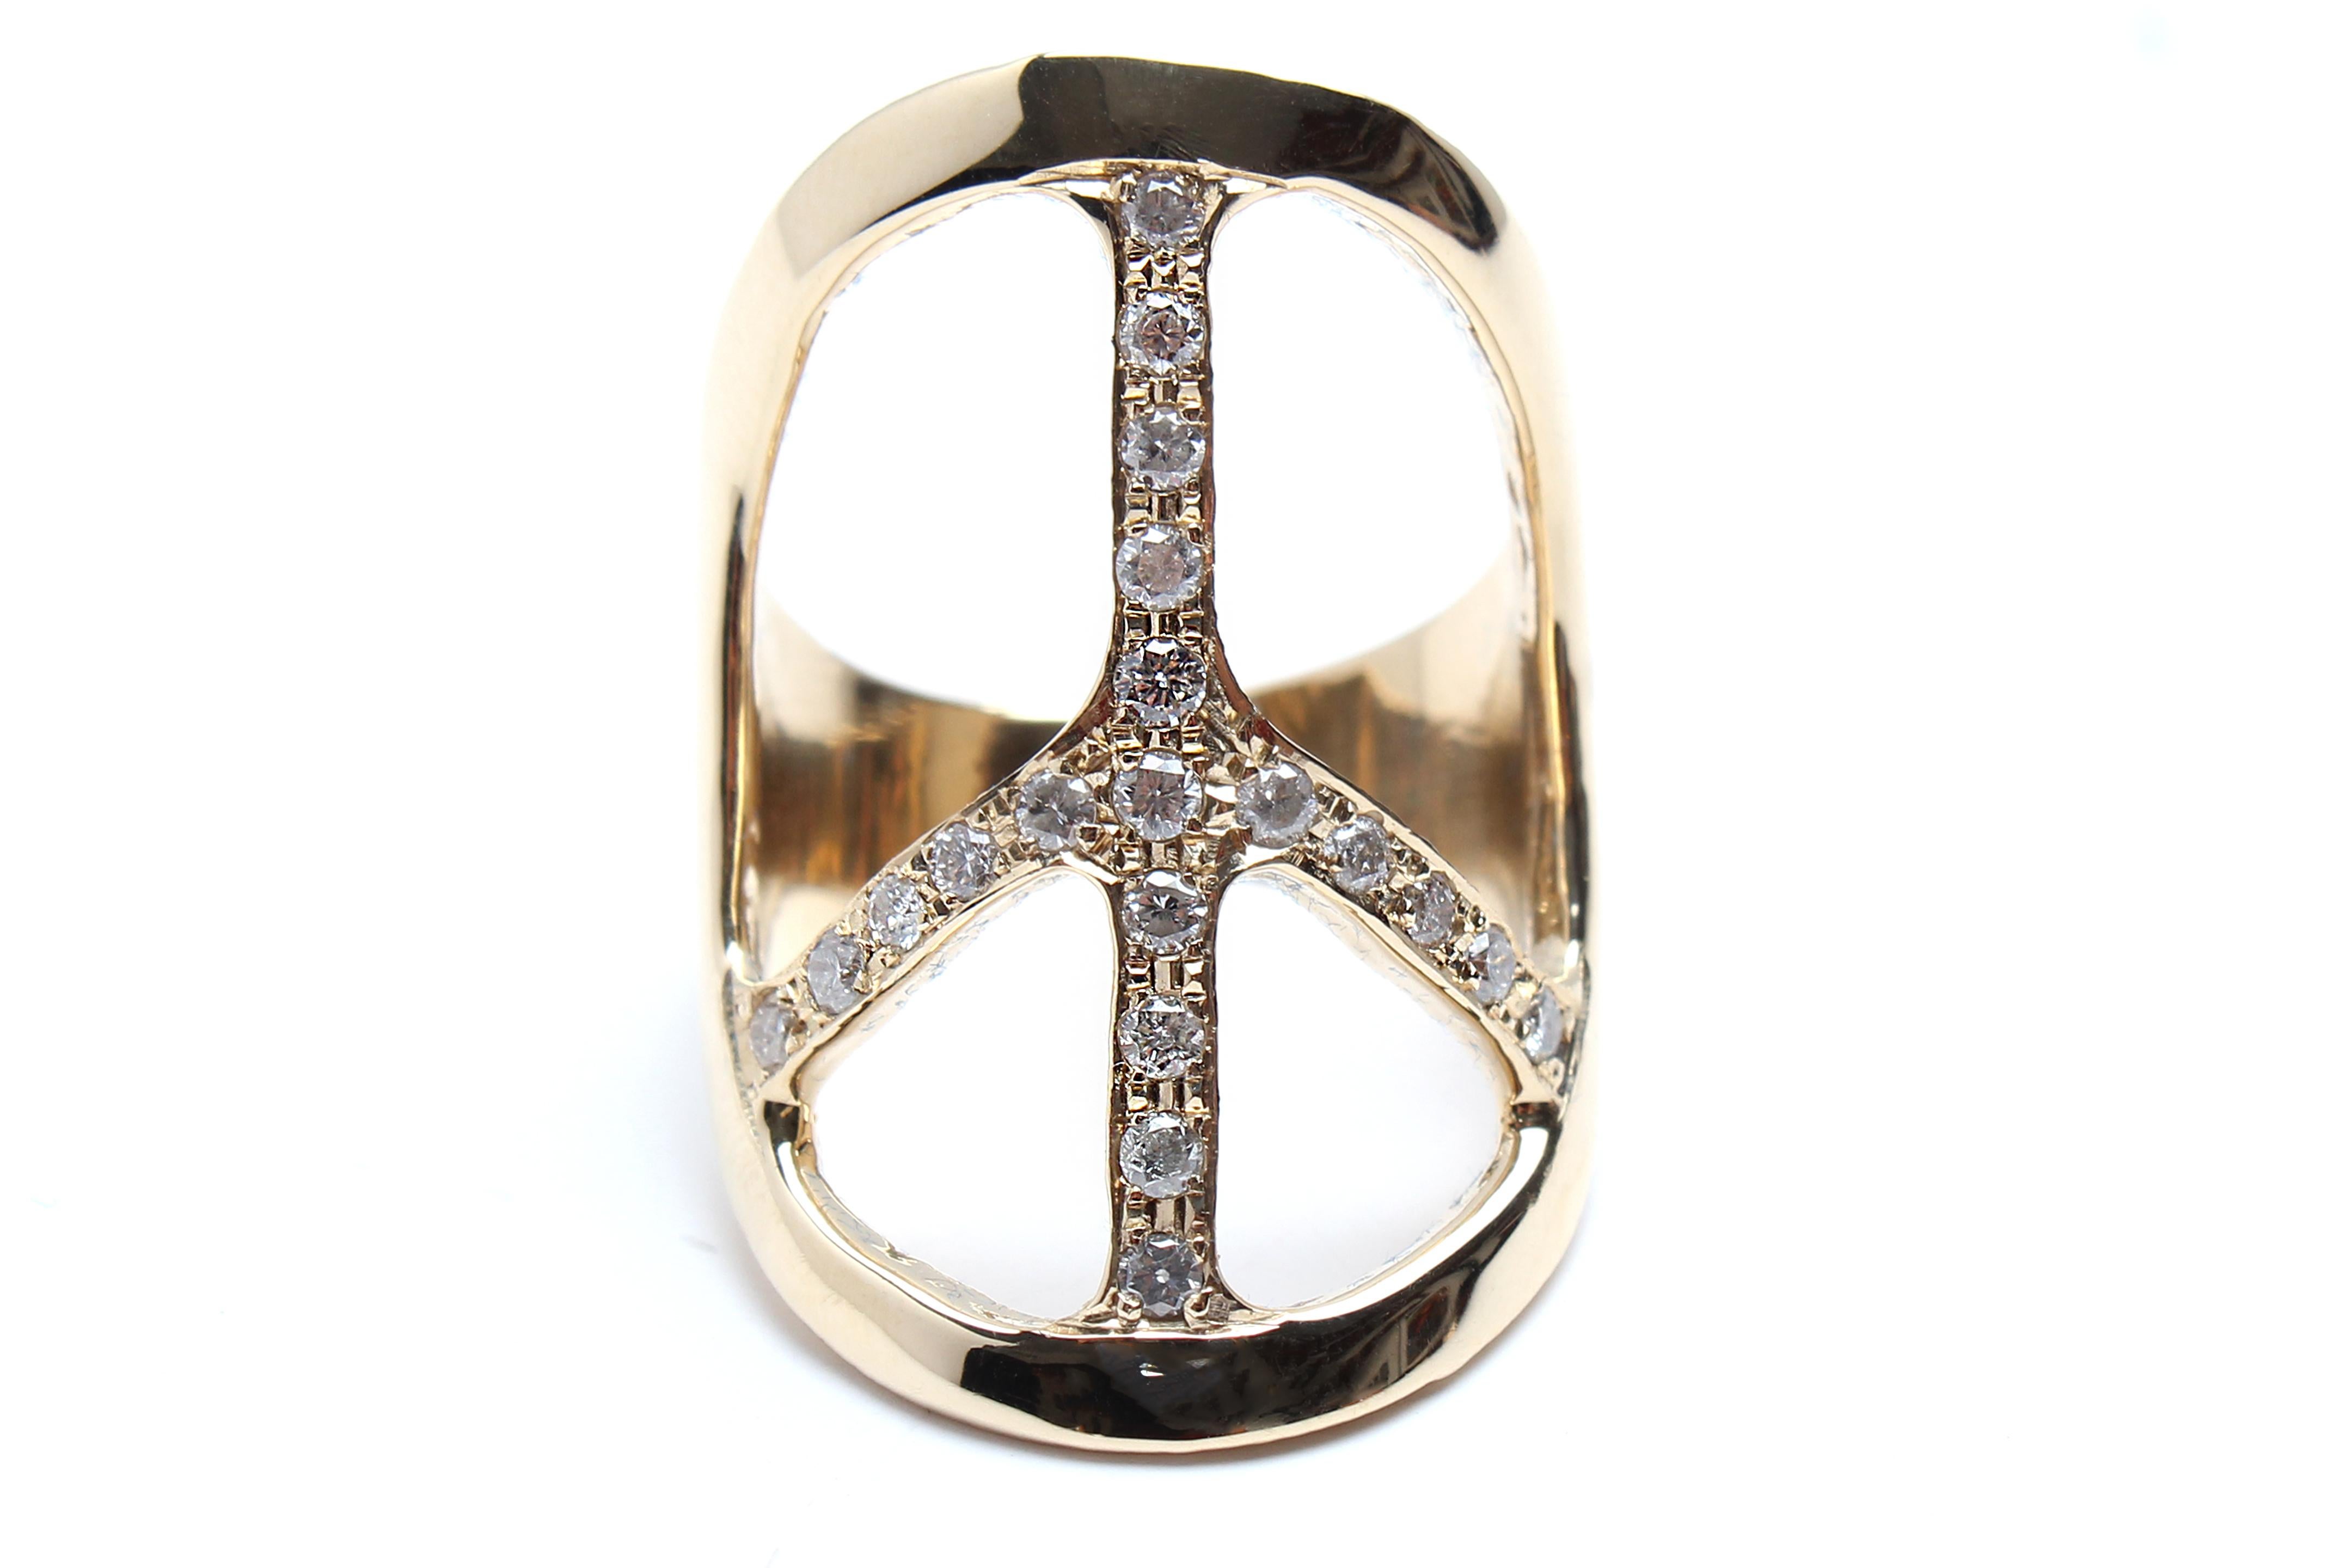 Clarissa Bronfman Signature Solid 14 Karat Gold Diamond Peace Ring For Sale 8